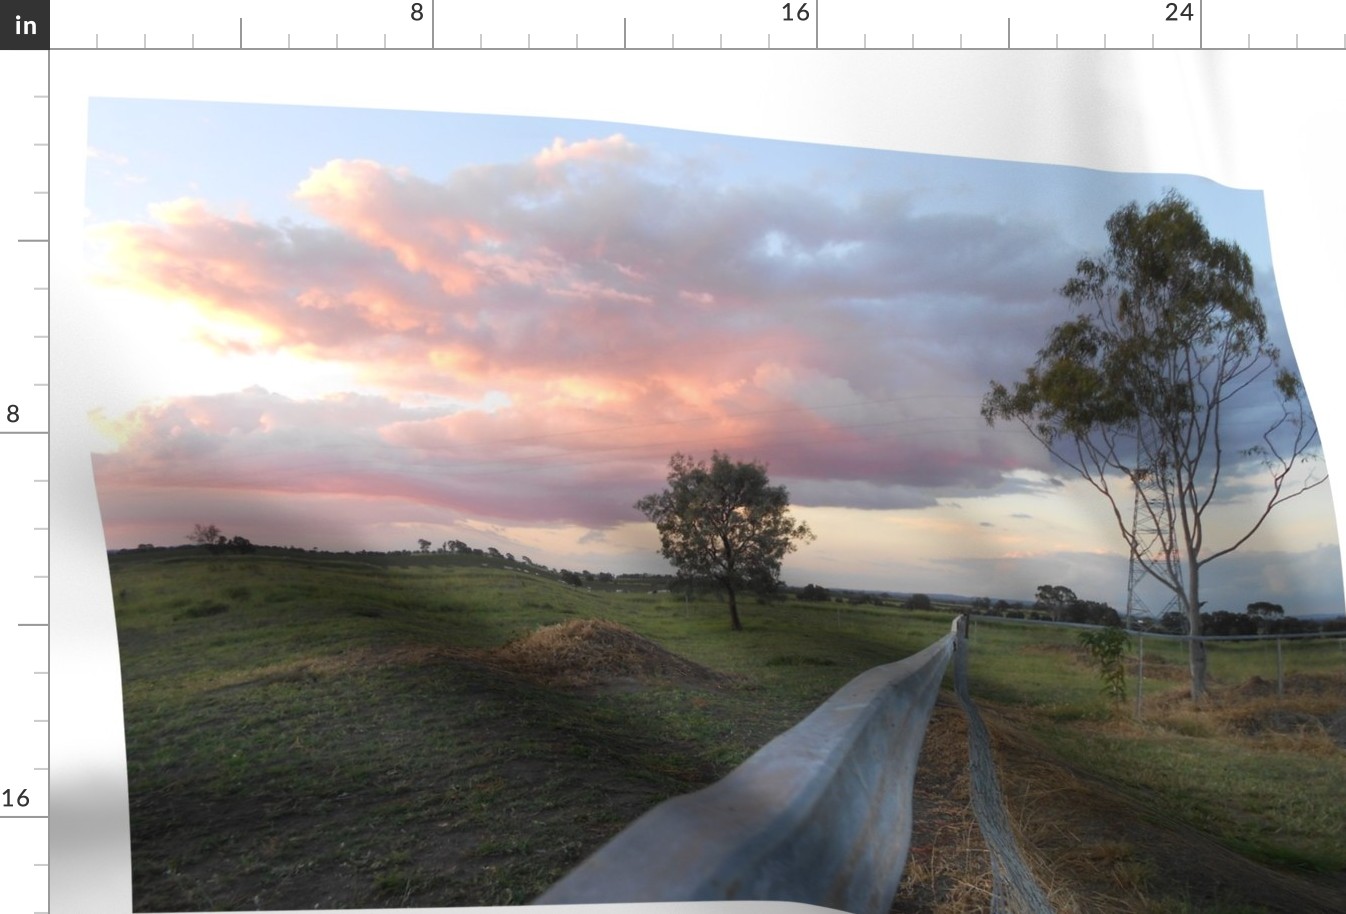 Along the Fenceline to Sunset - Large Scale Australian Landscape (Ref. 0437b)